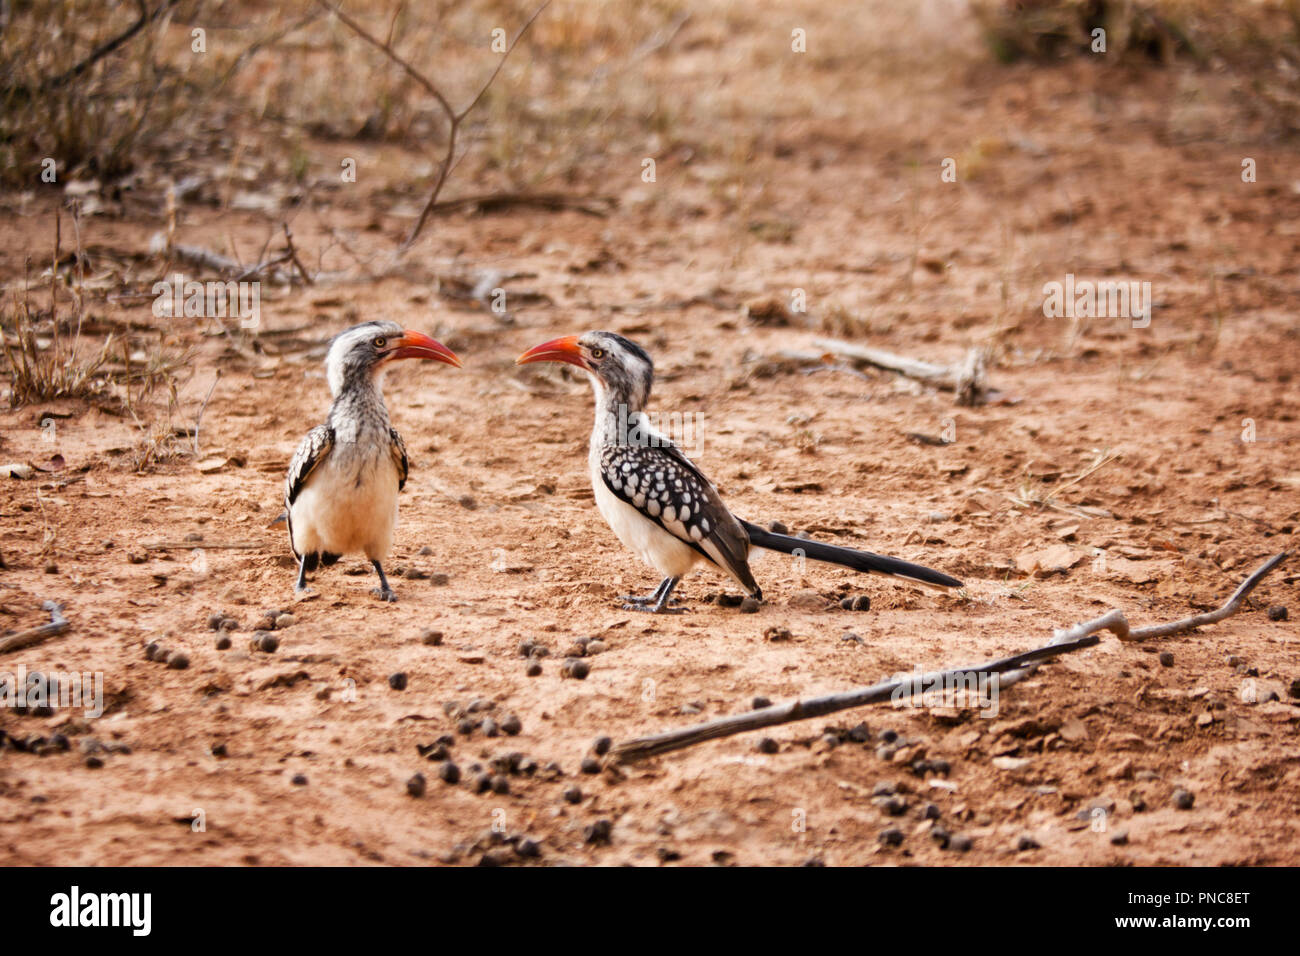 hornbill birds on the sand on the ground, Botswana, Africa. Stock Photo